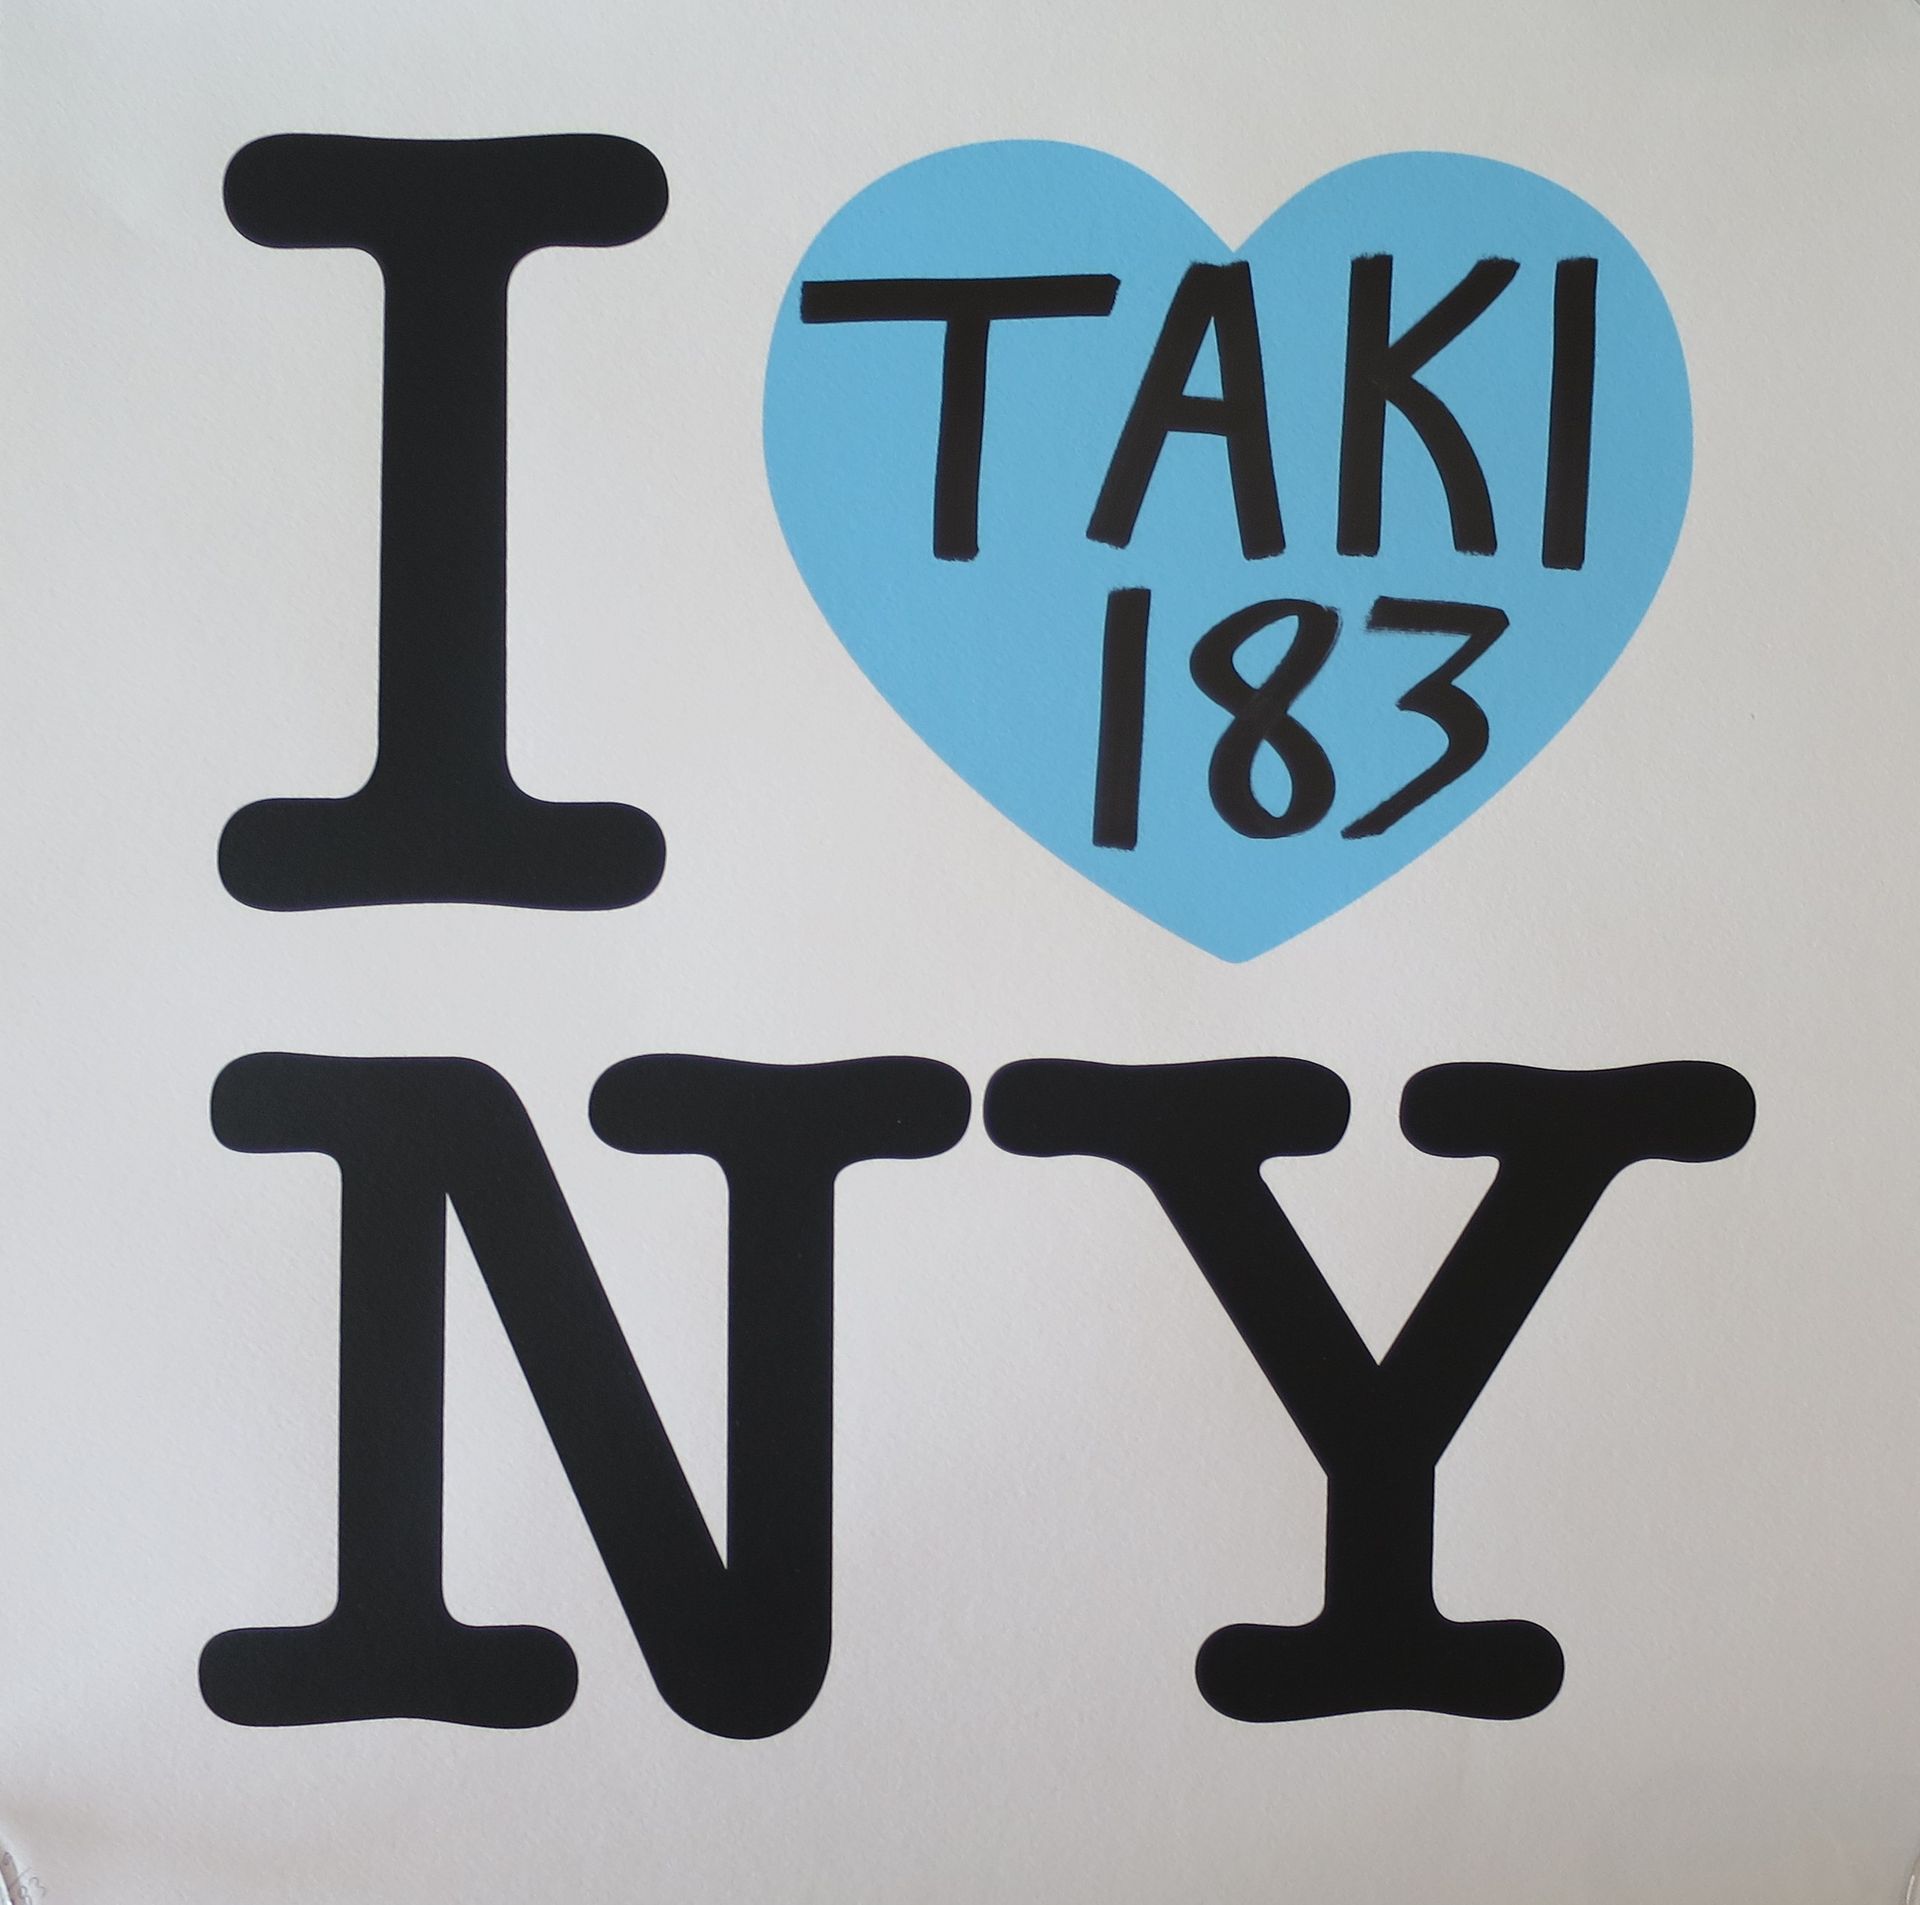 TAKI 183 TAKI 183

I Heart NY: Blaue Ausgabe, 2021

2-Farben-Siebdruck

Signiert&hellip;